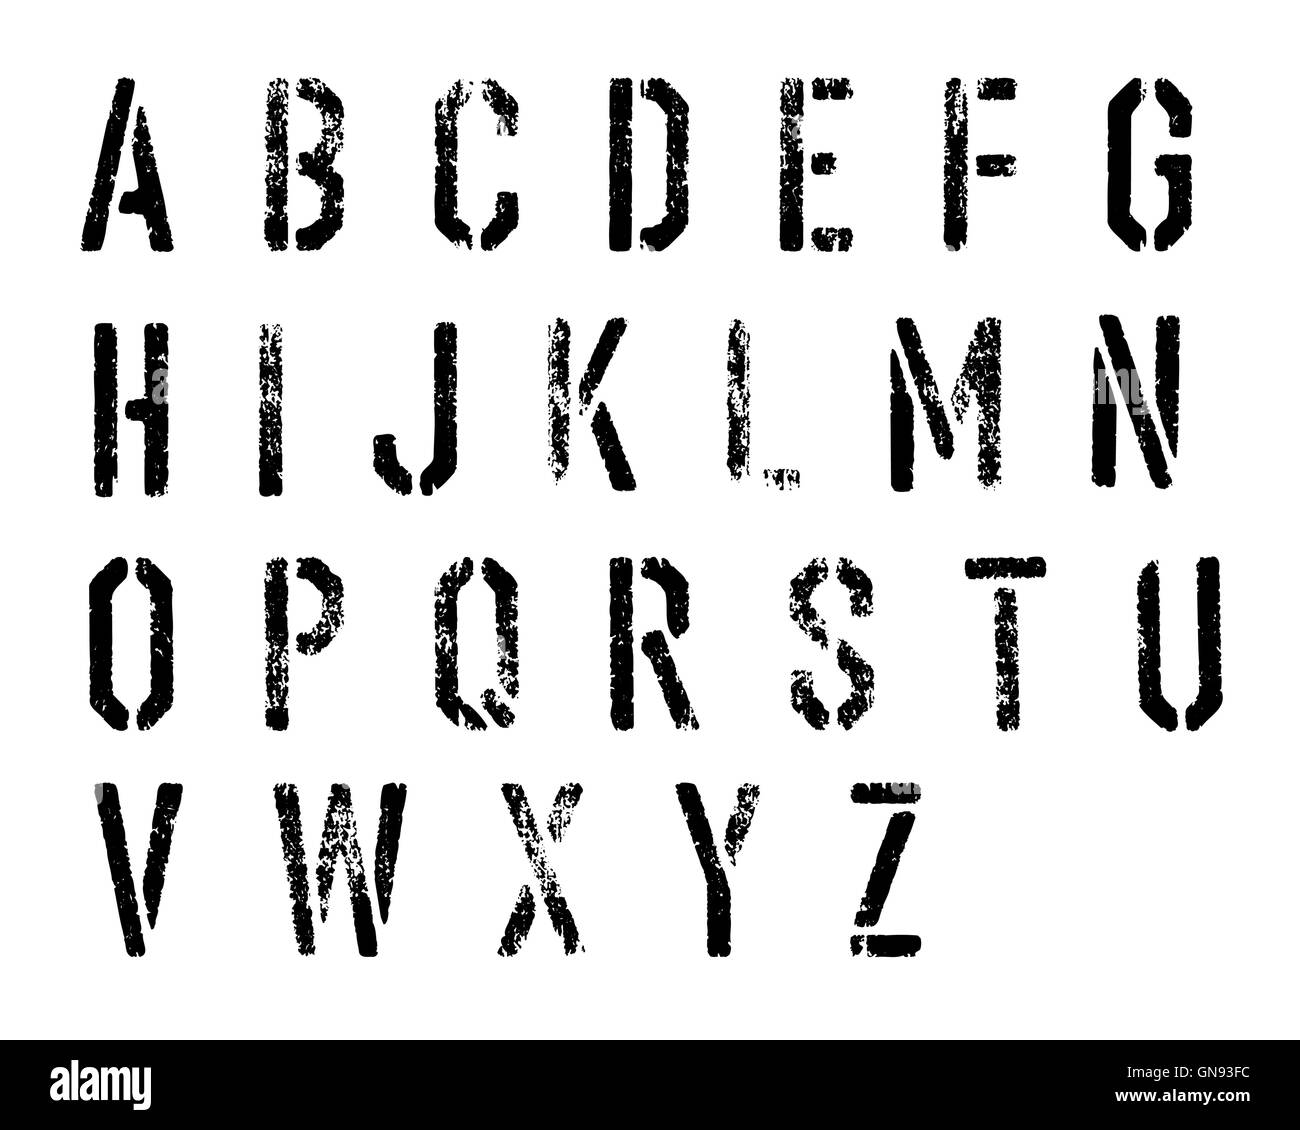 Stencil spray paint font detailed alphabet Vector Image